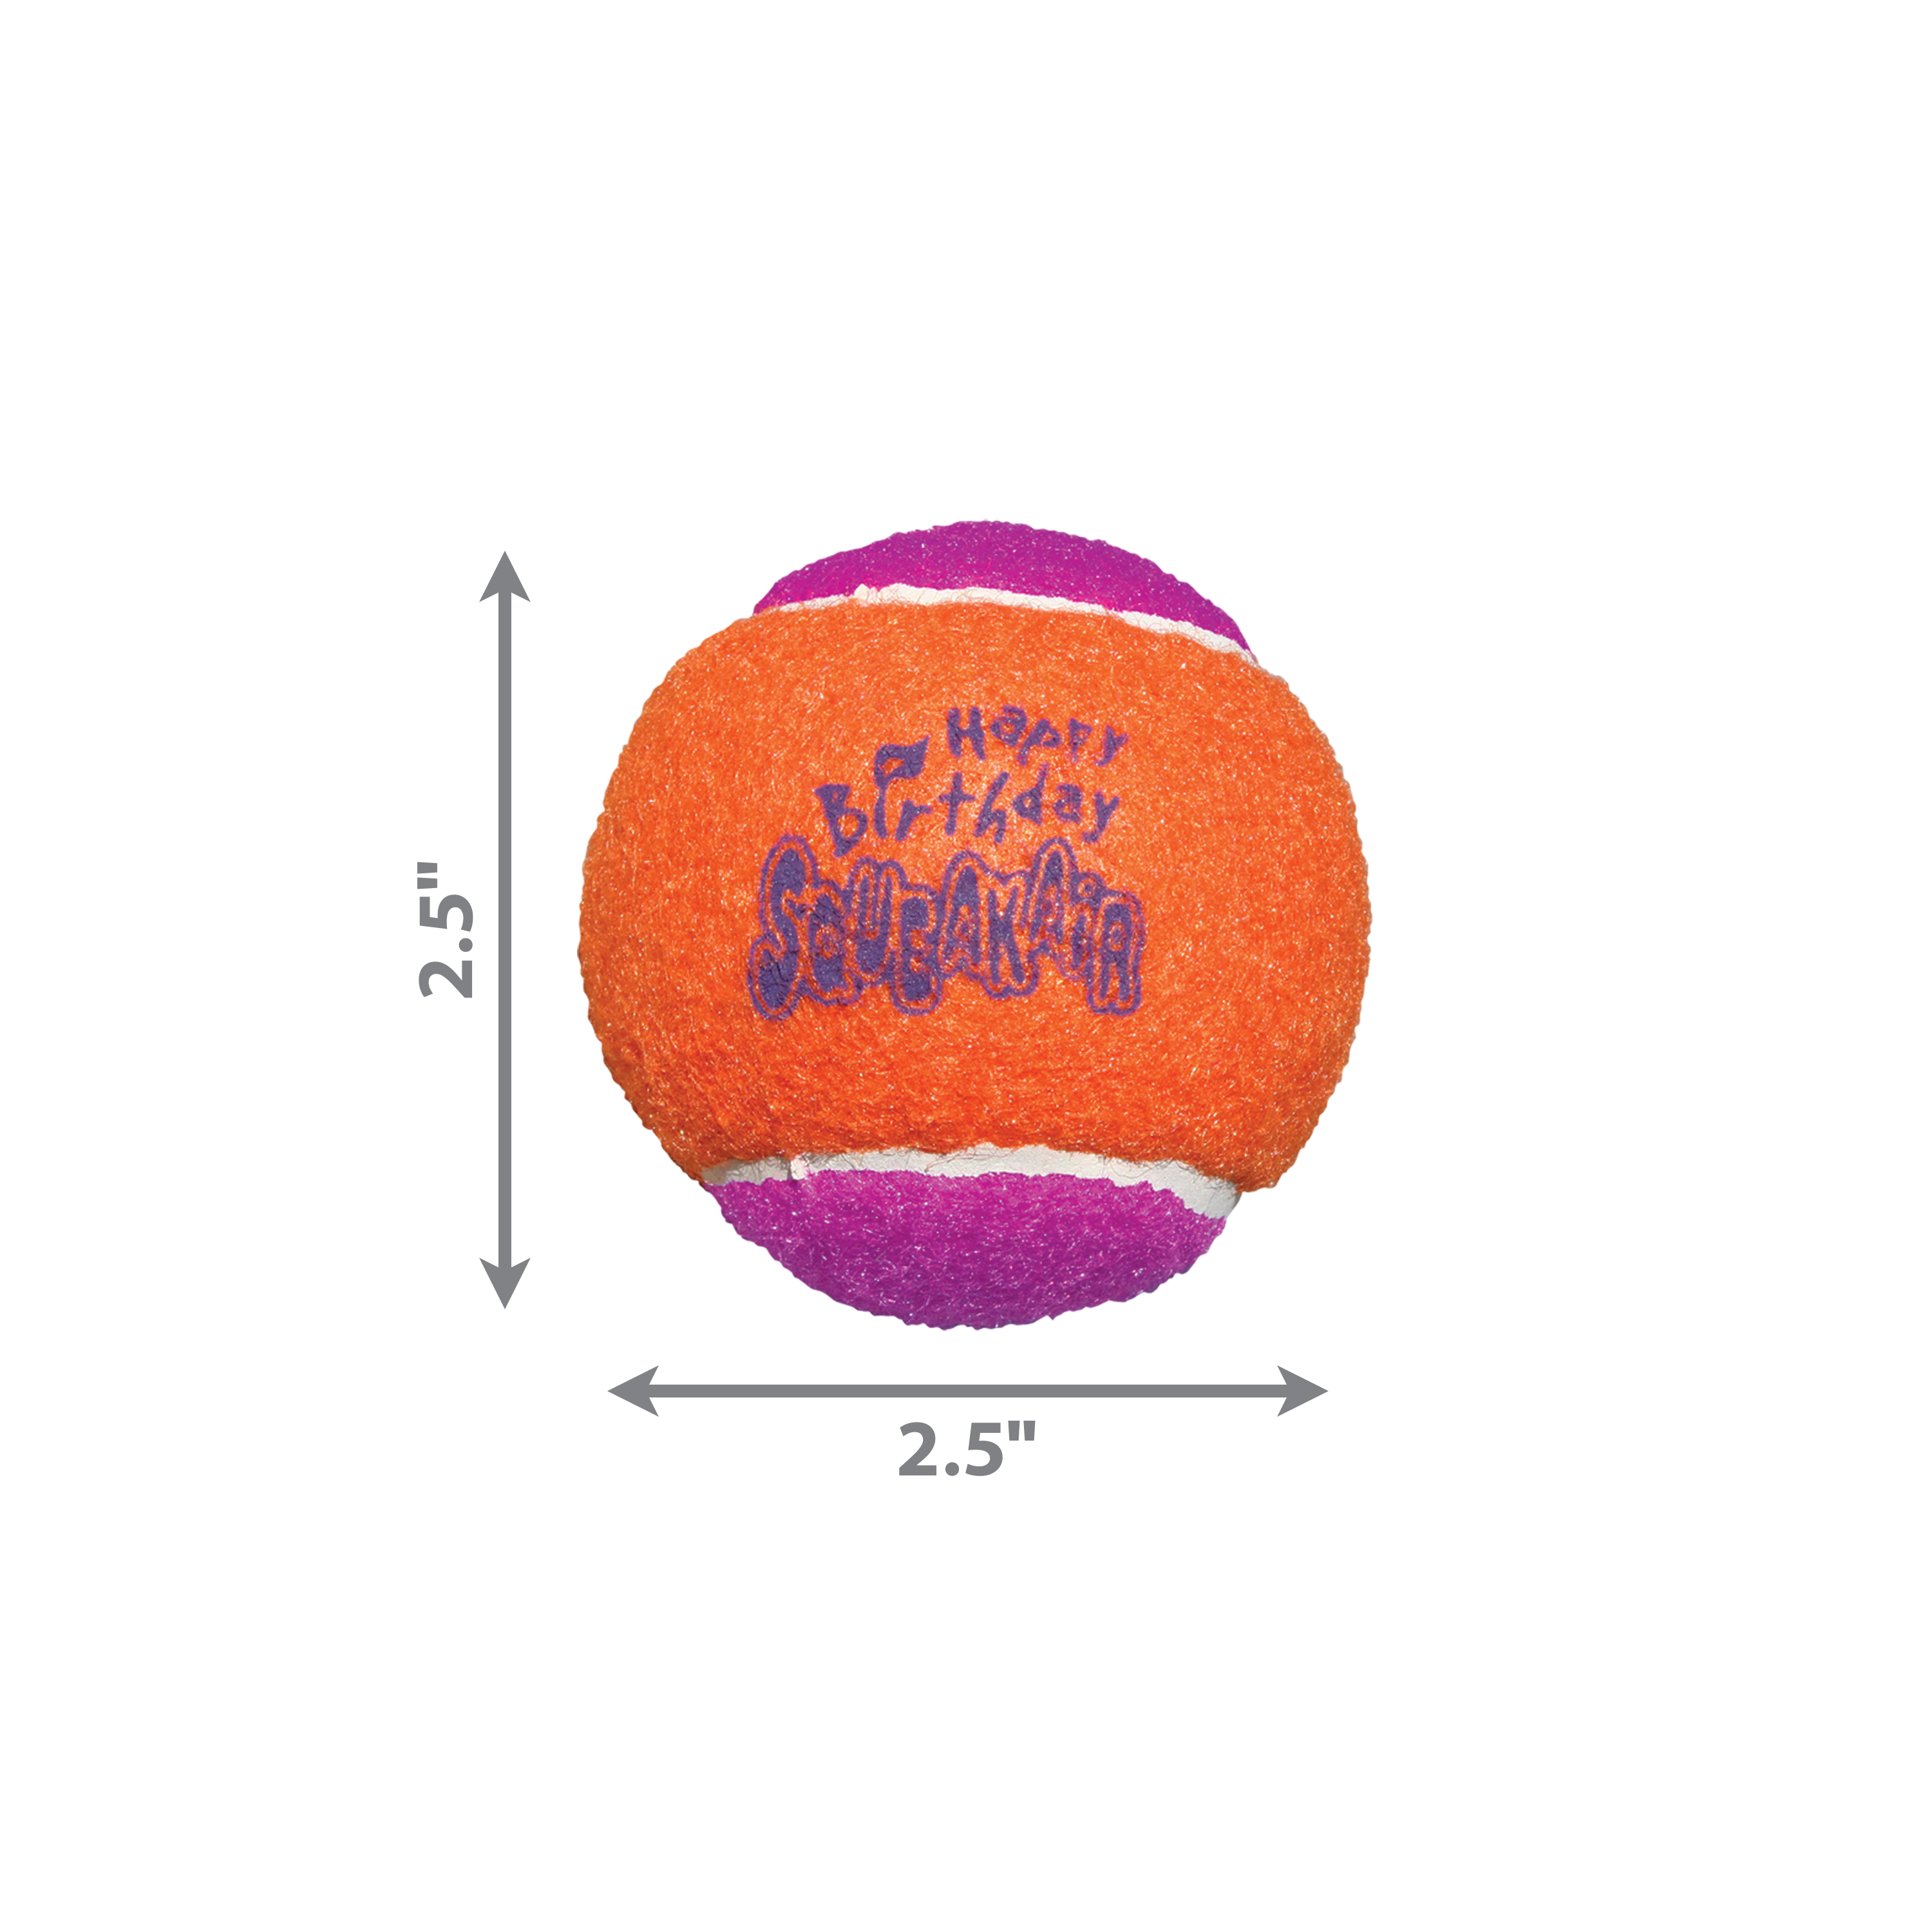 SqueakAir Birthday Balls 3-pk dimoffpack product image